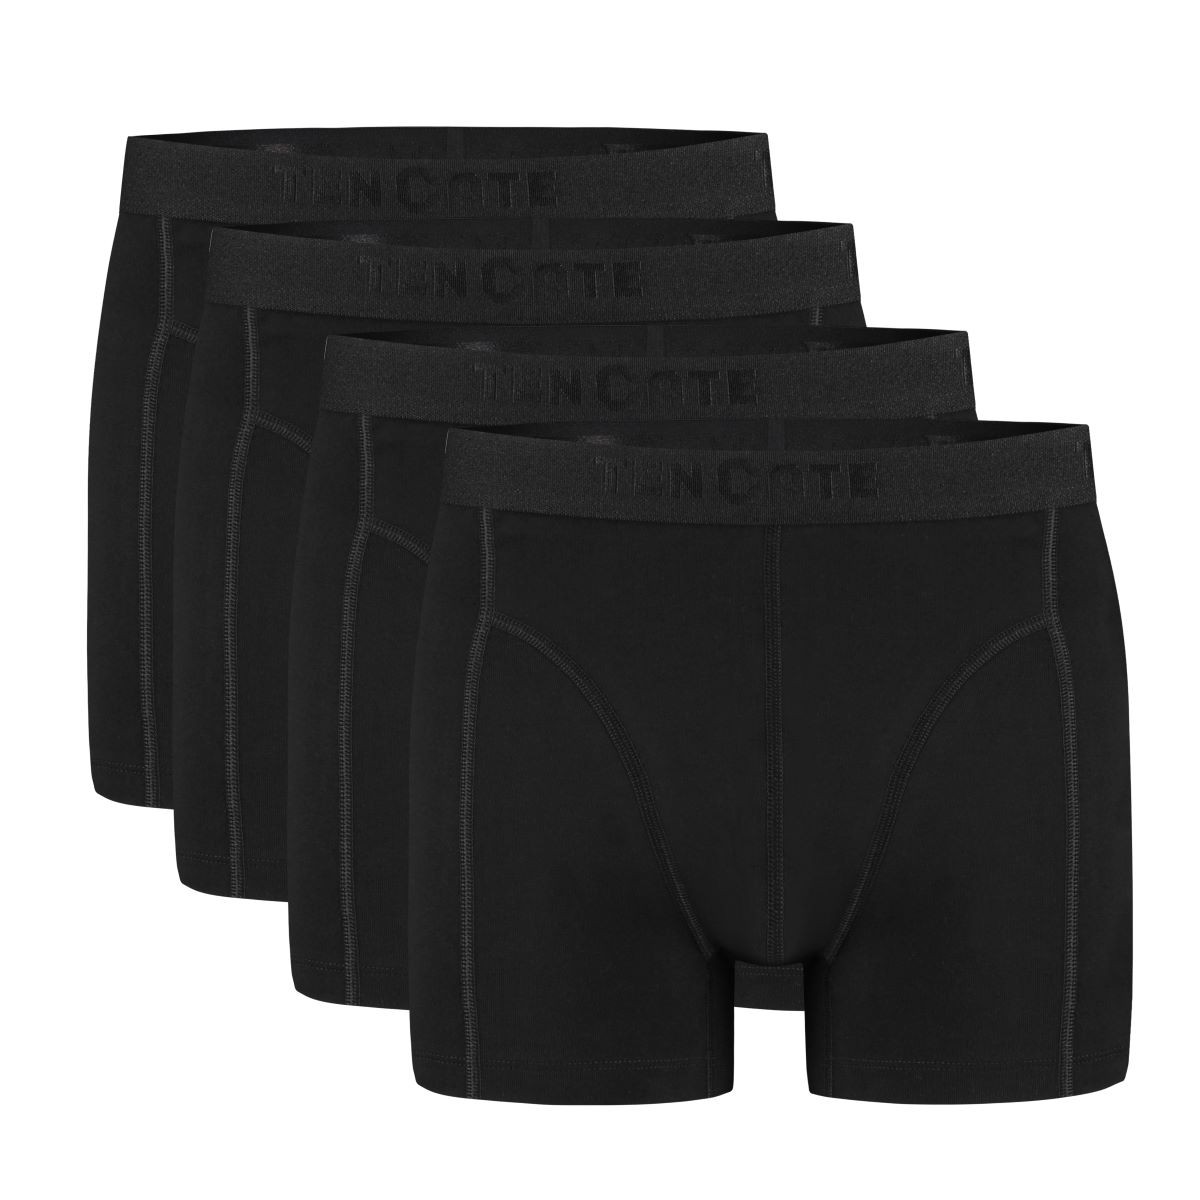 Ten Cate Boxershorts Organic Cotton 4-pack Zwart-XXL